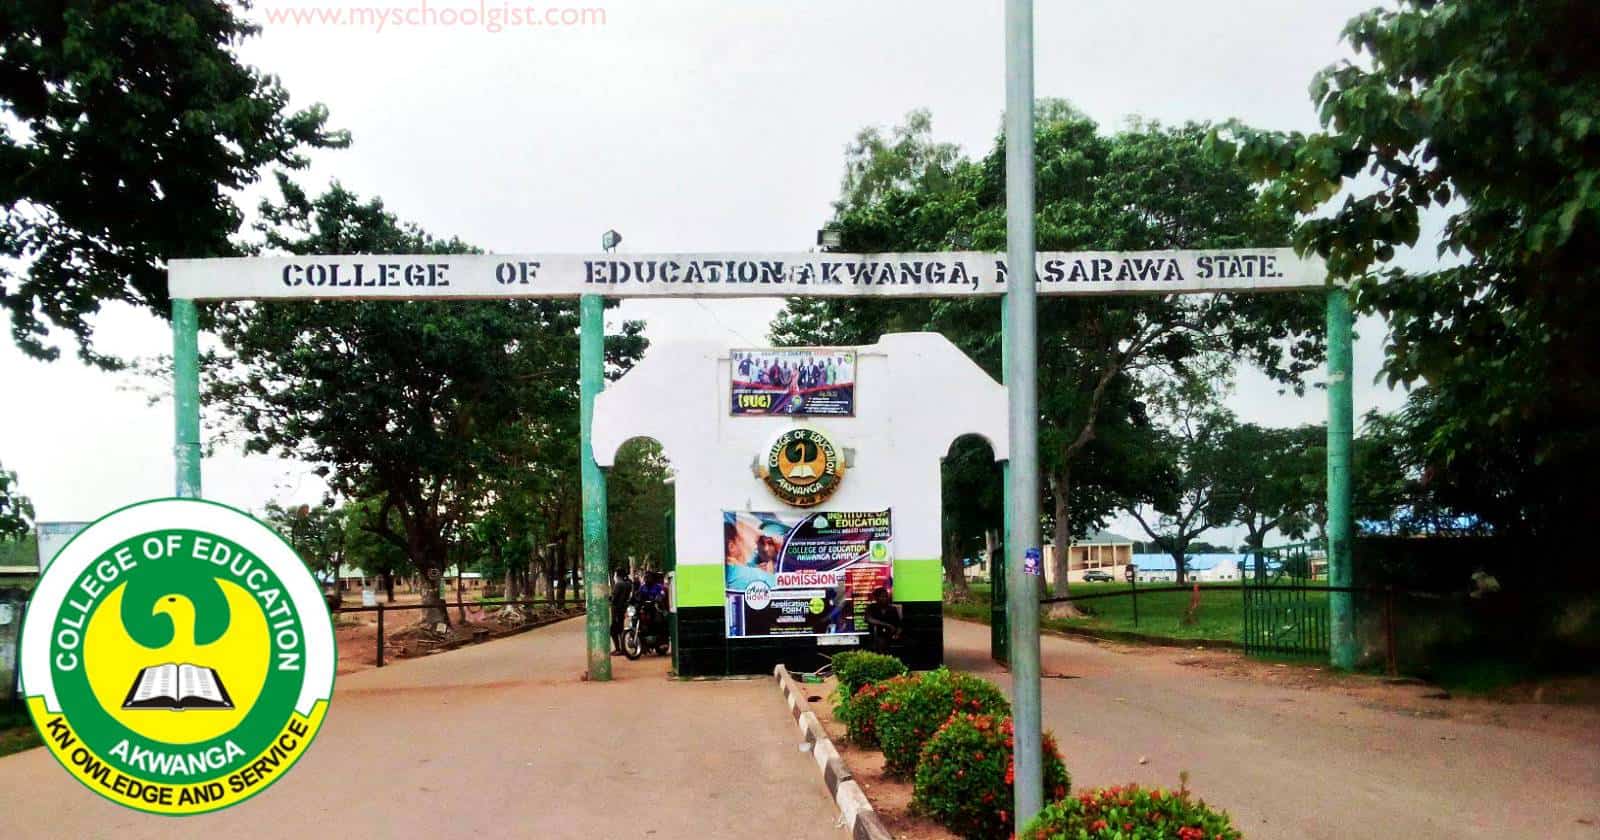 College of Education Akwanga Post UTME Form